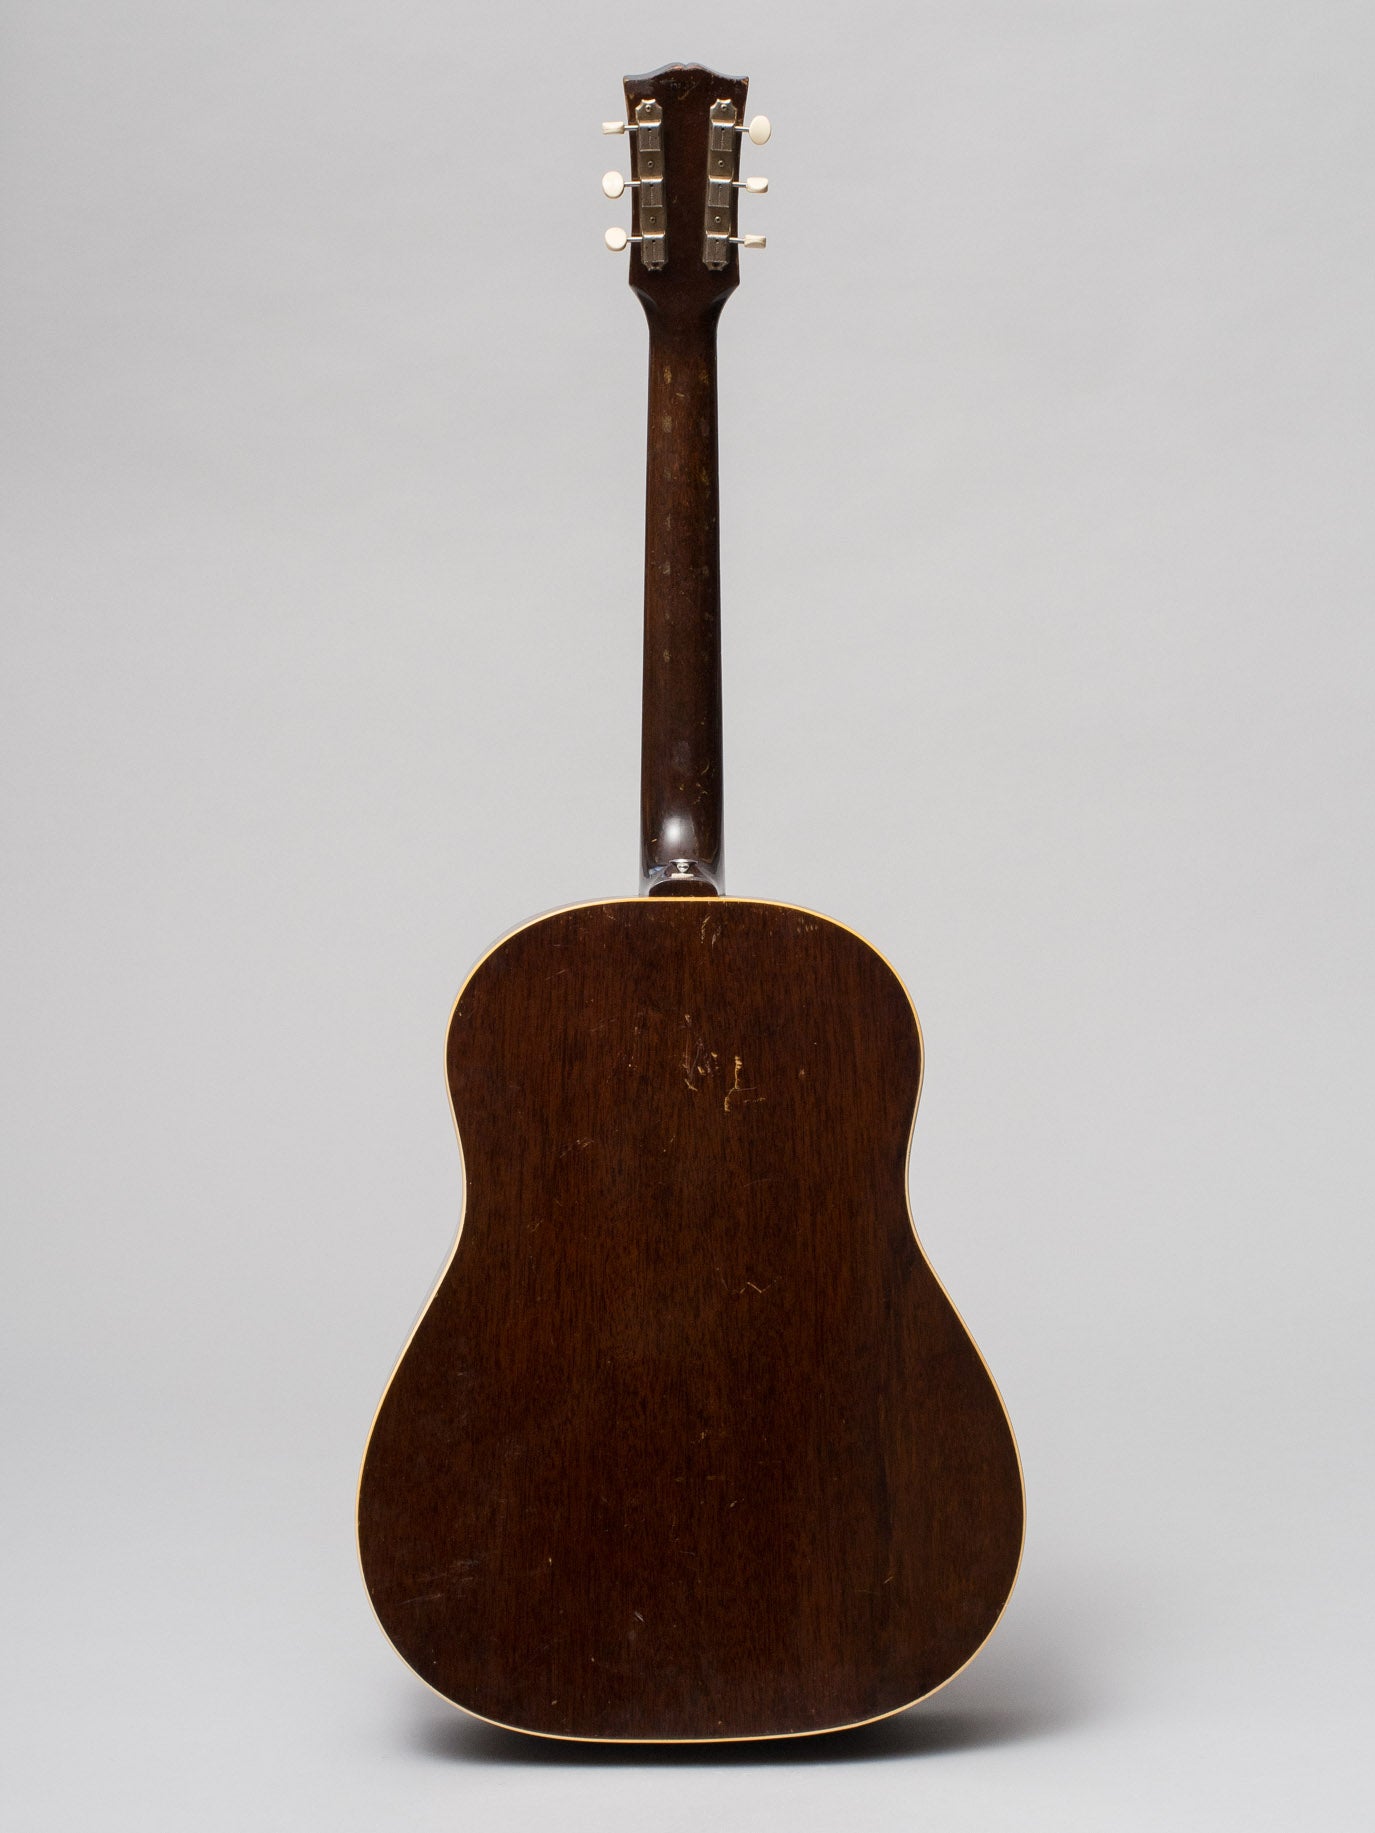 1964 Gibson J-50